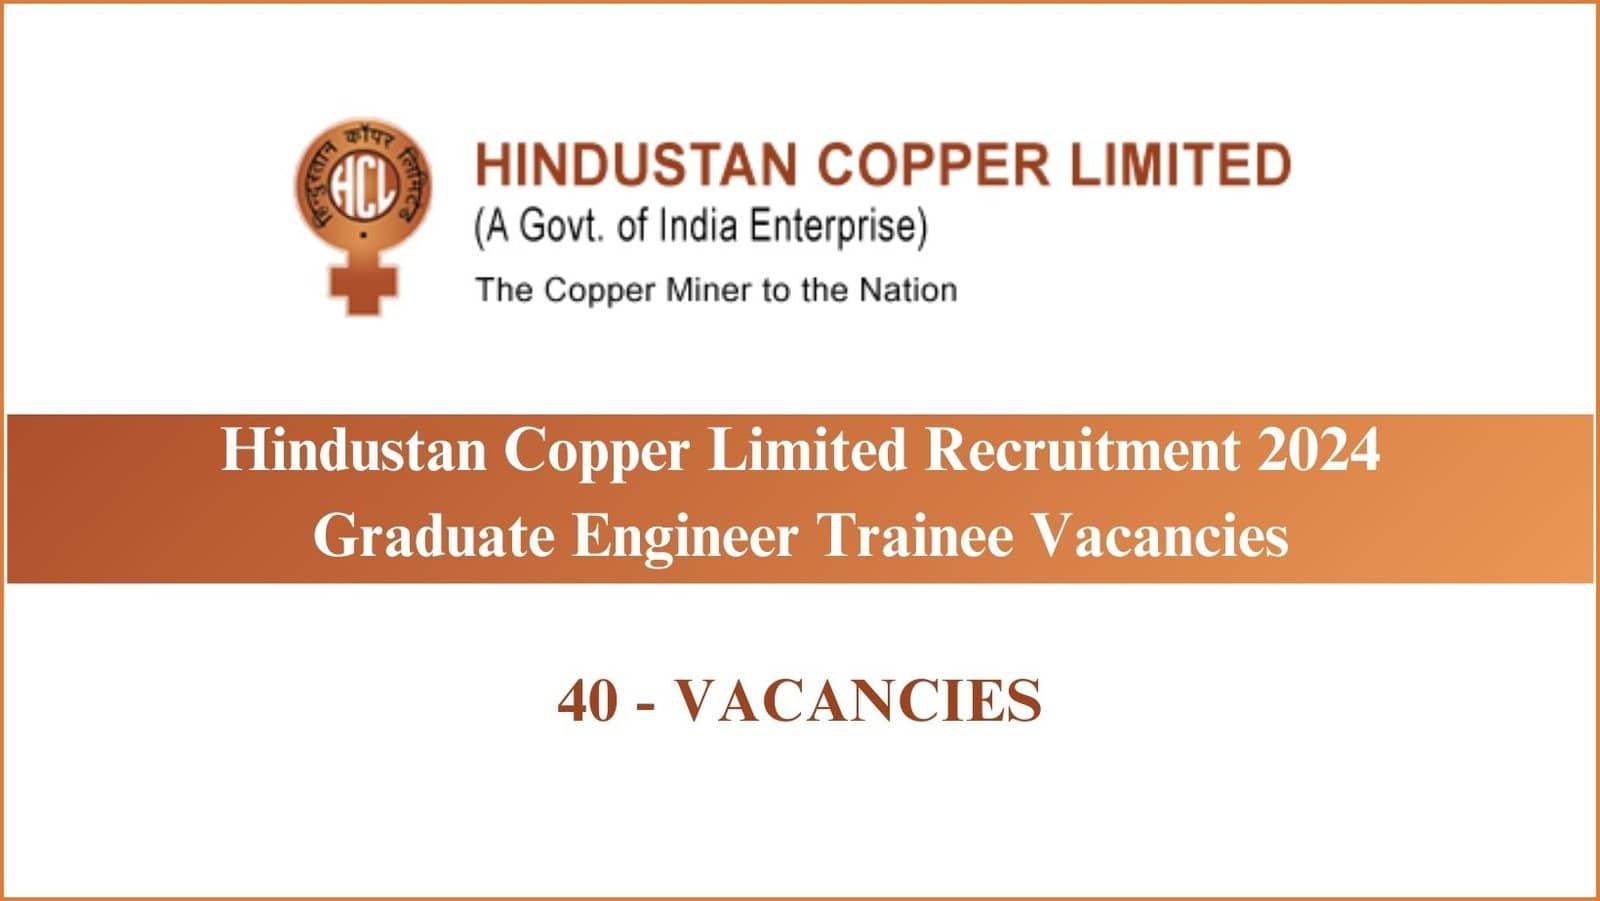 Hindustan Copper Limited Recruitment